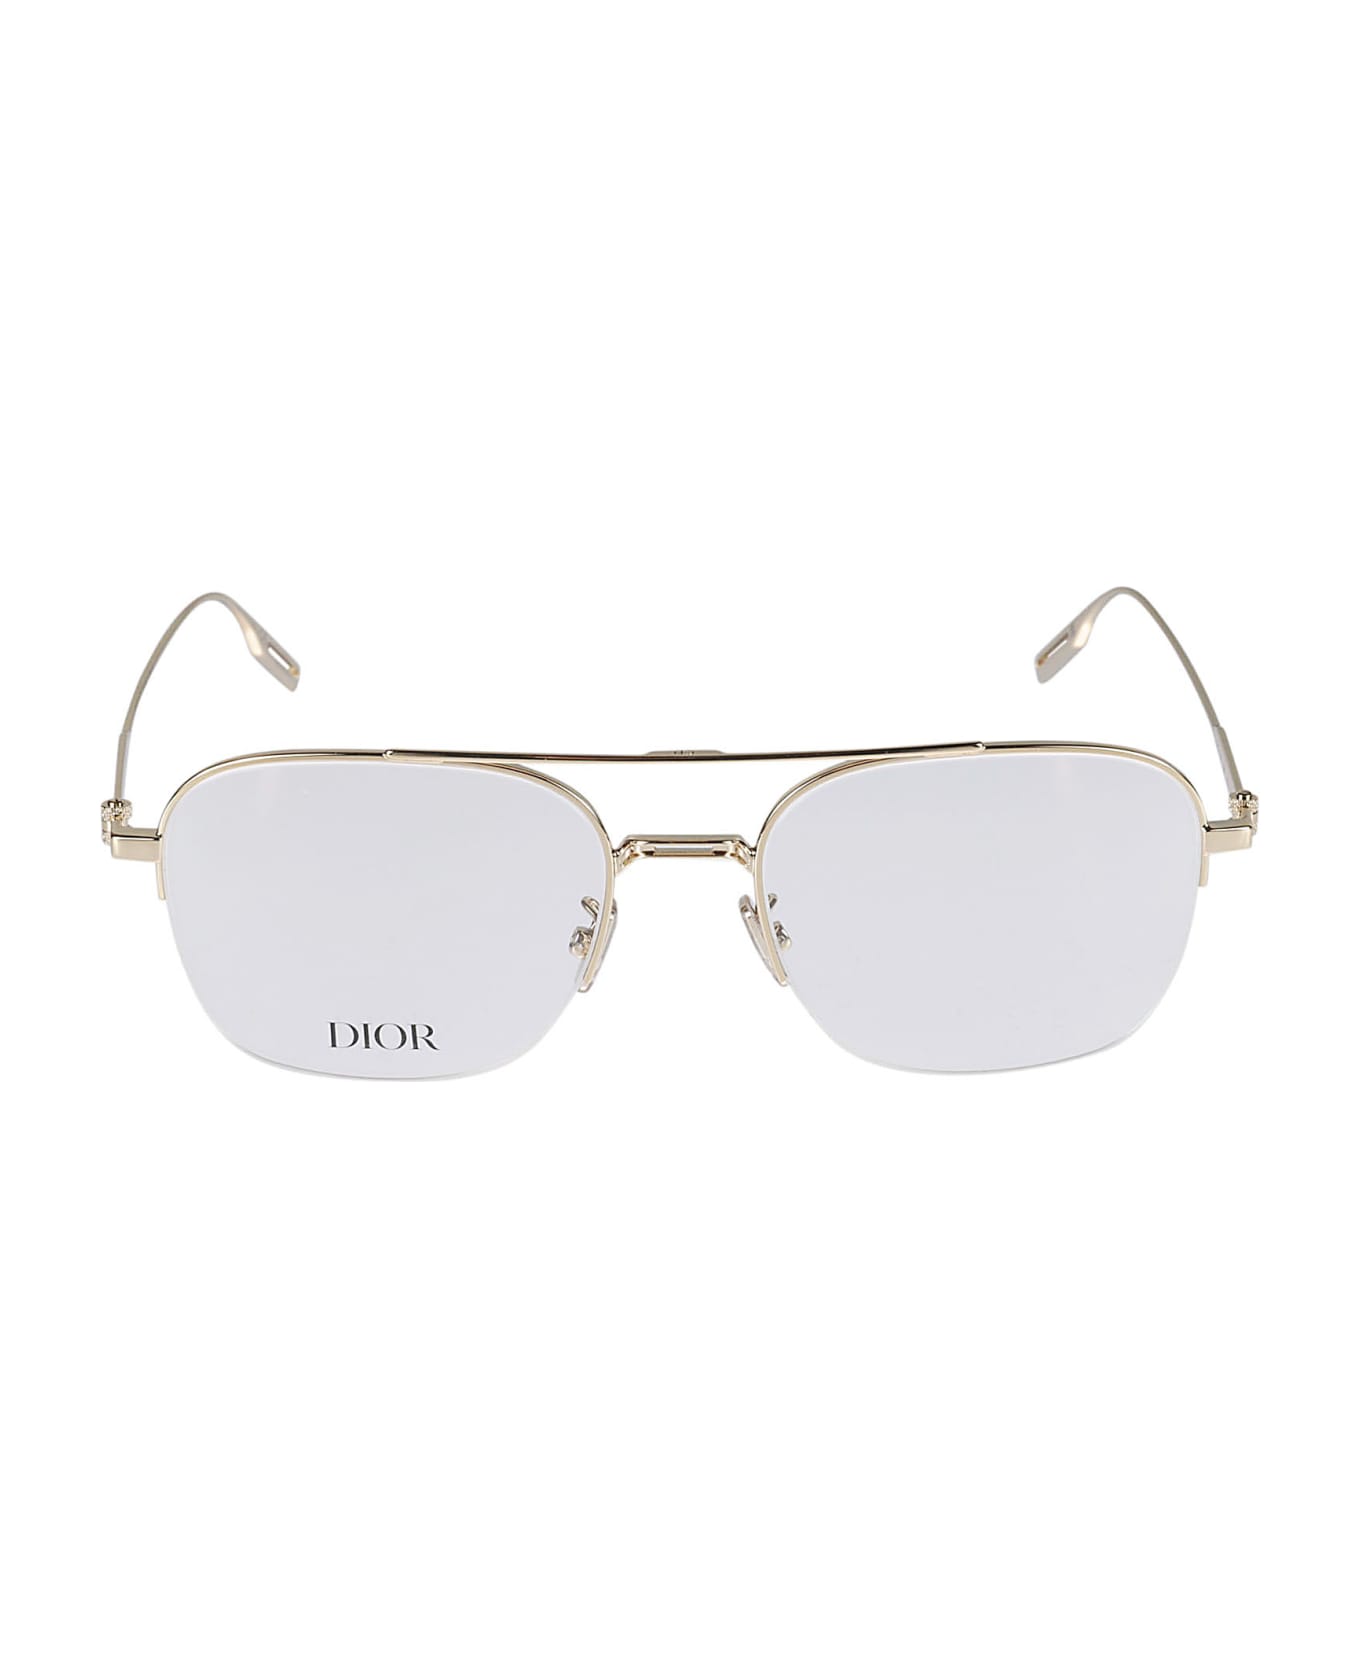 Dior Eyewear Neo Dior Glasses - b000